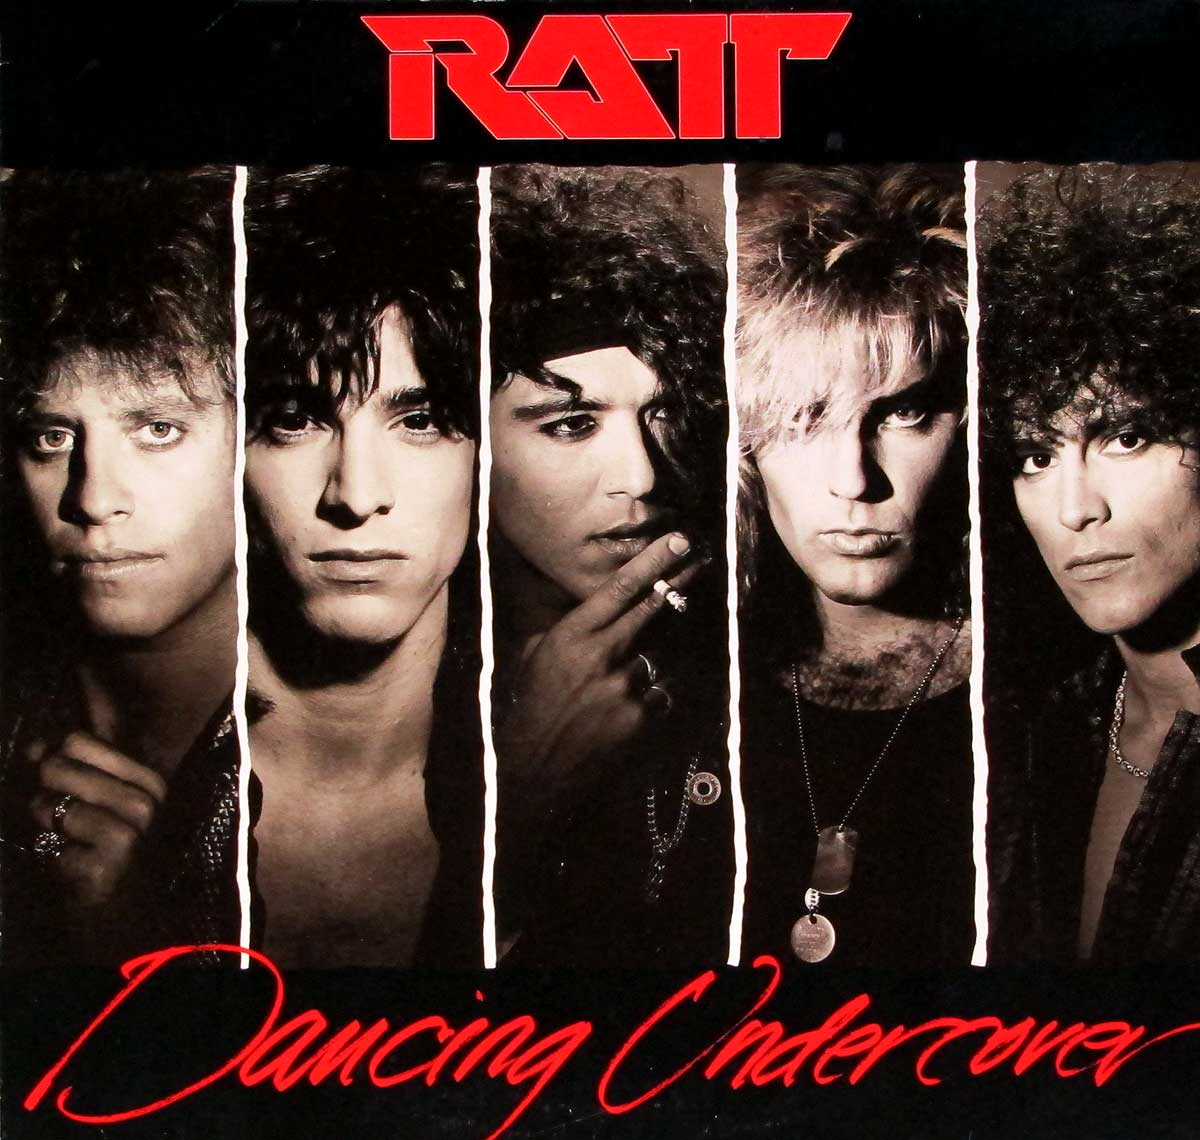 Album Front Cover Photo of RATT - Dancing Undercover  